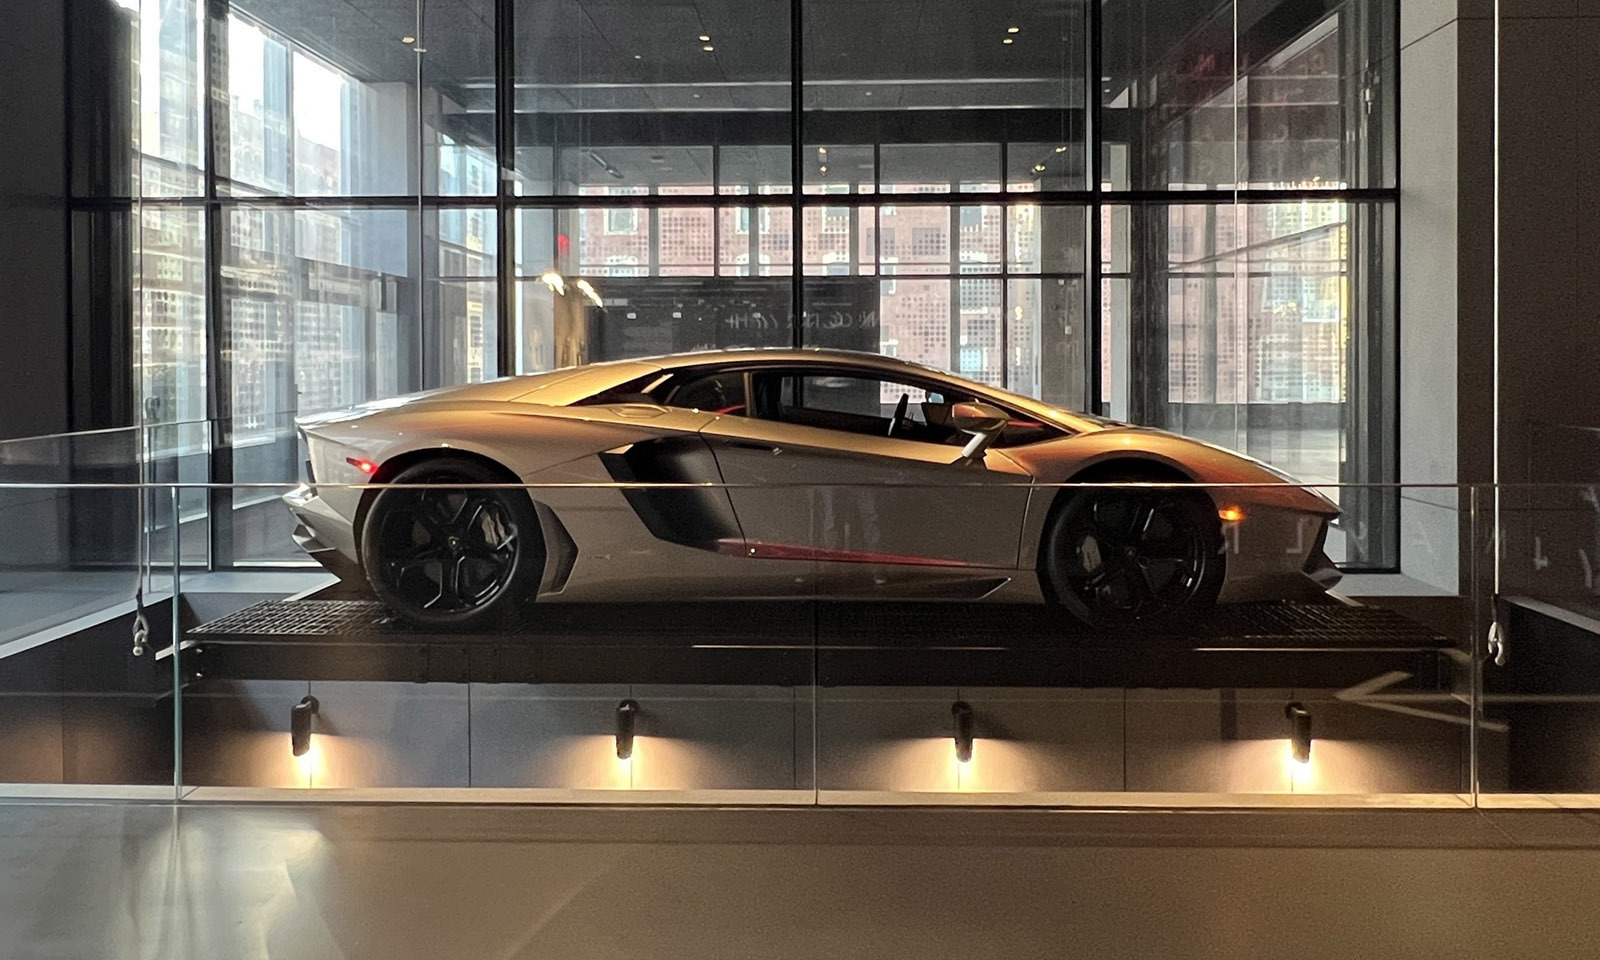 Bruce Wayne’s Dark Knight Rises Lamborghini at SPYSCAPE HQ in NYC